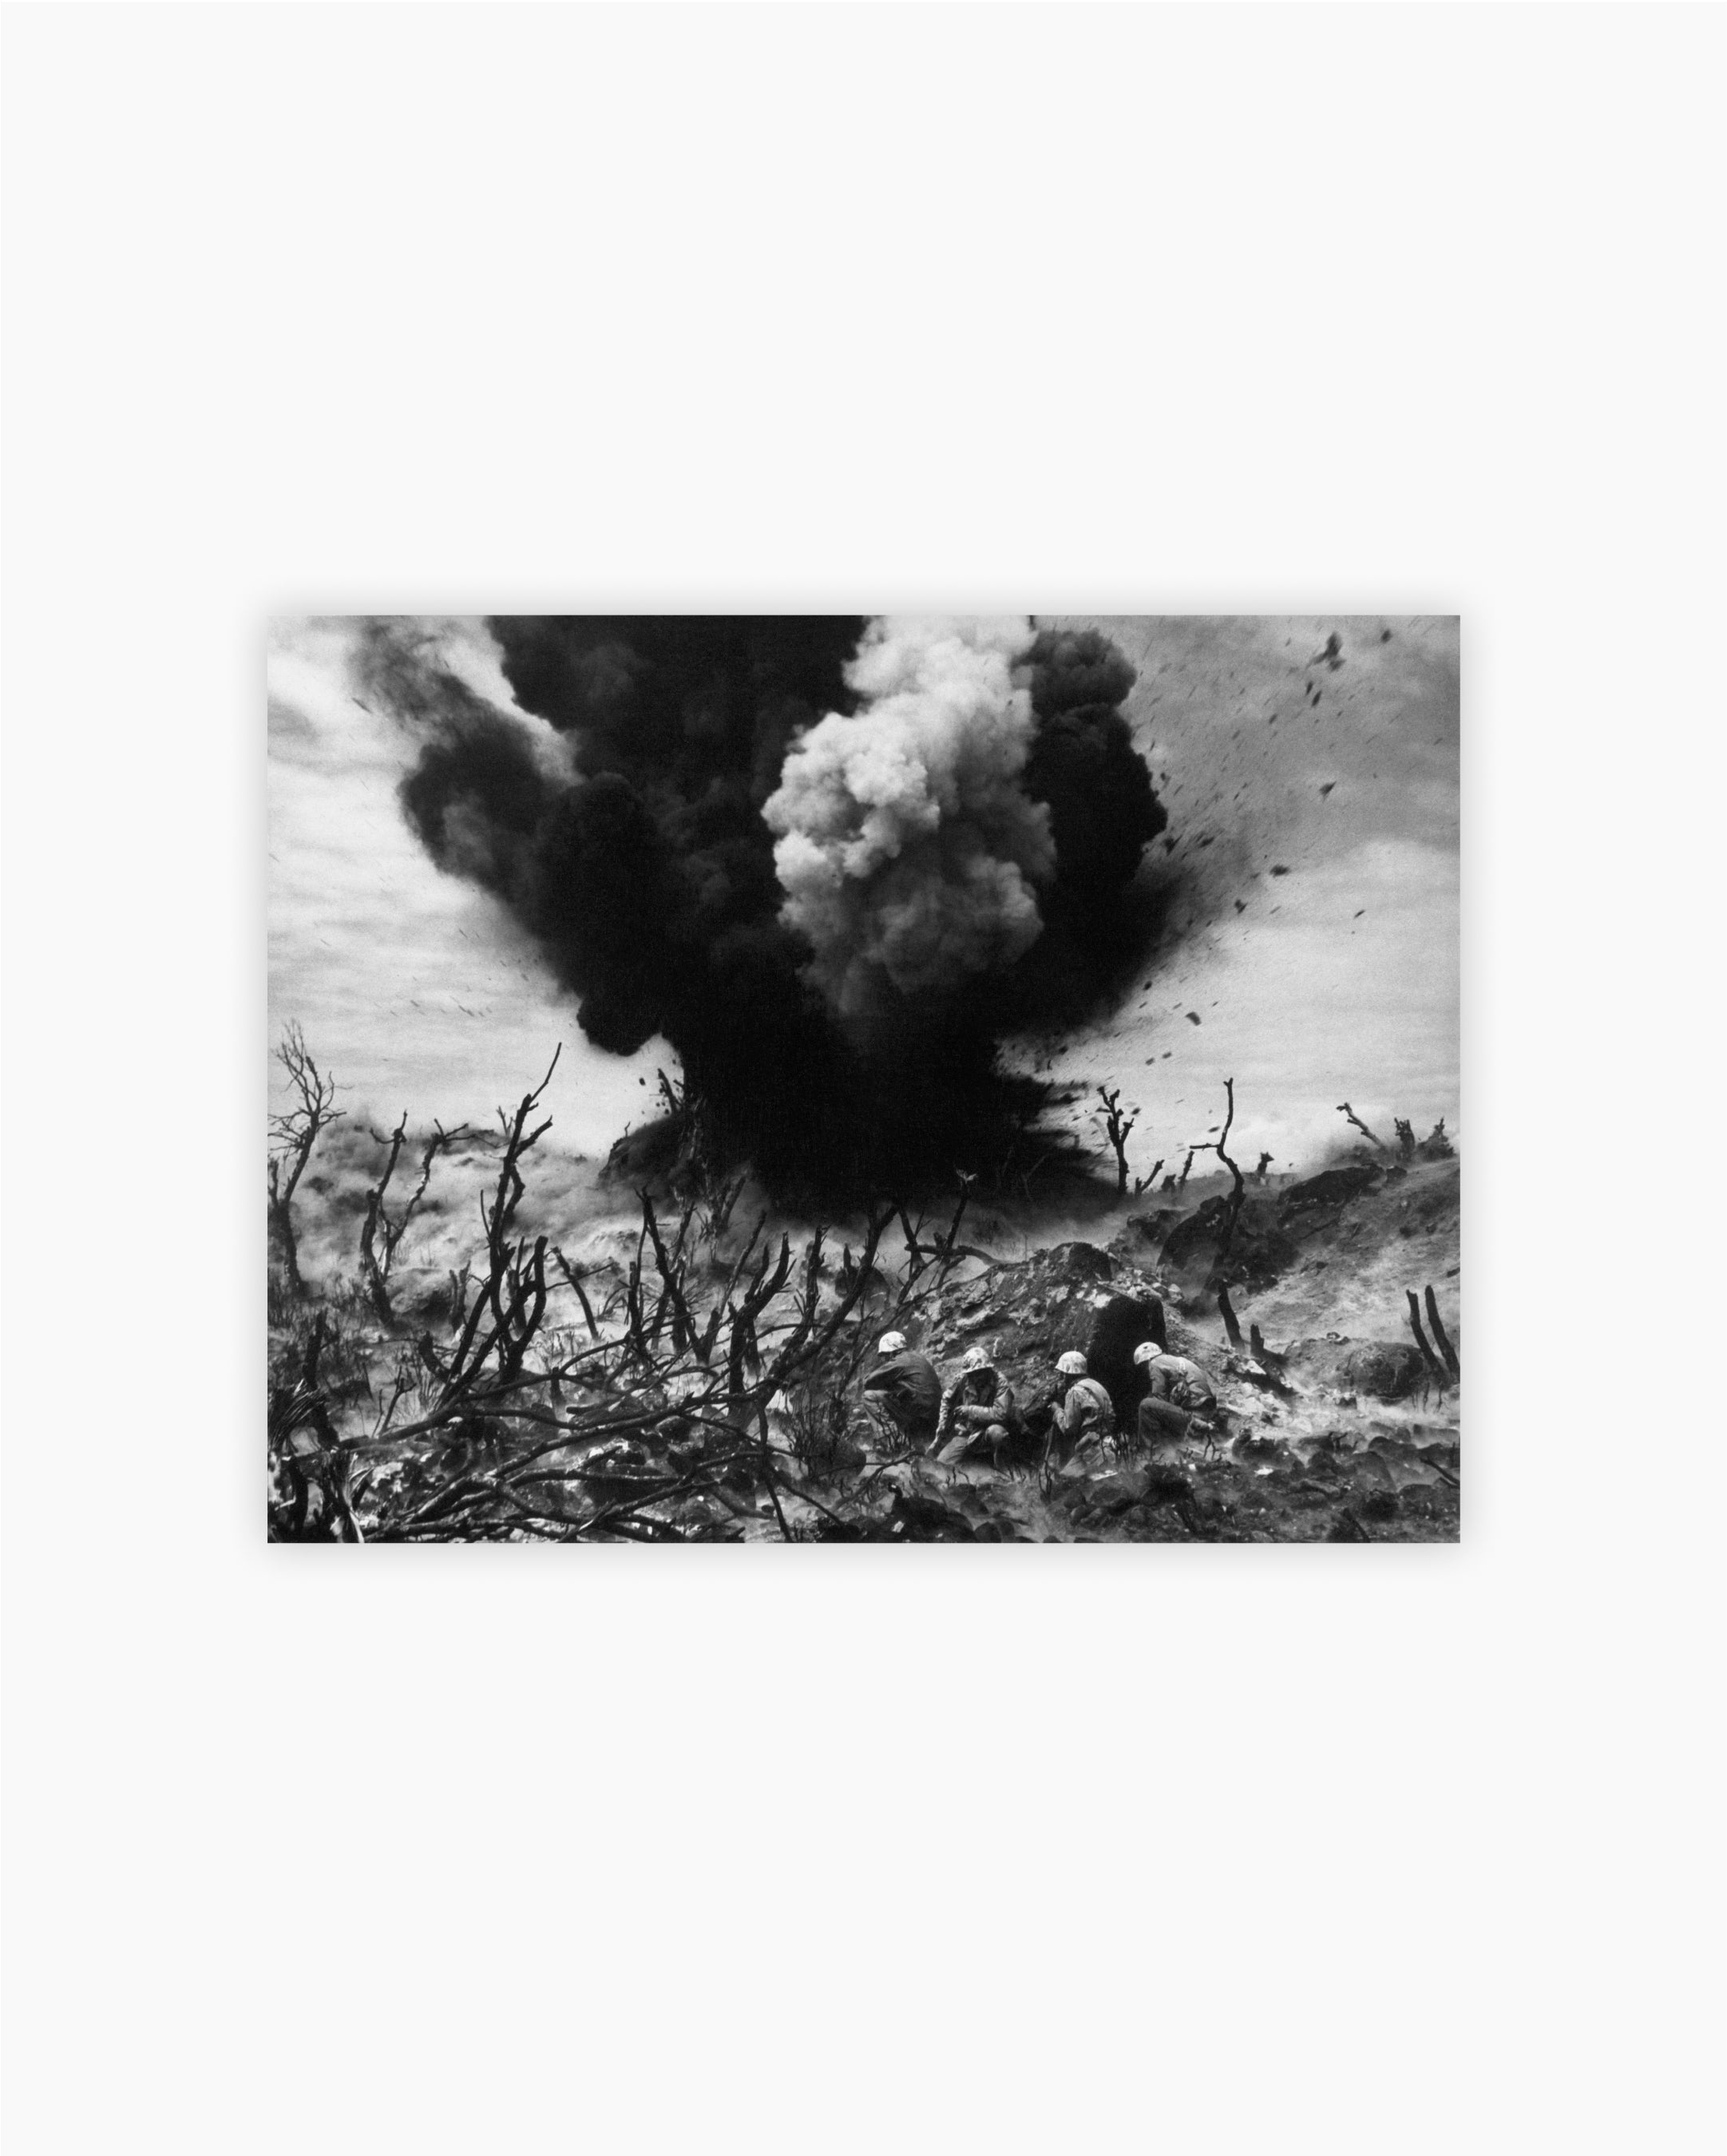 Sticks and stones, Bits of human bones. Iwo Jima, 1945